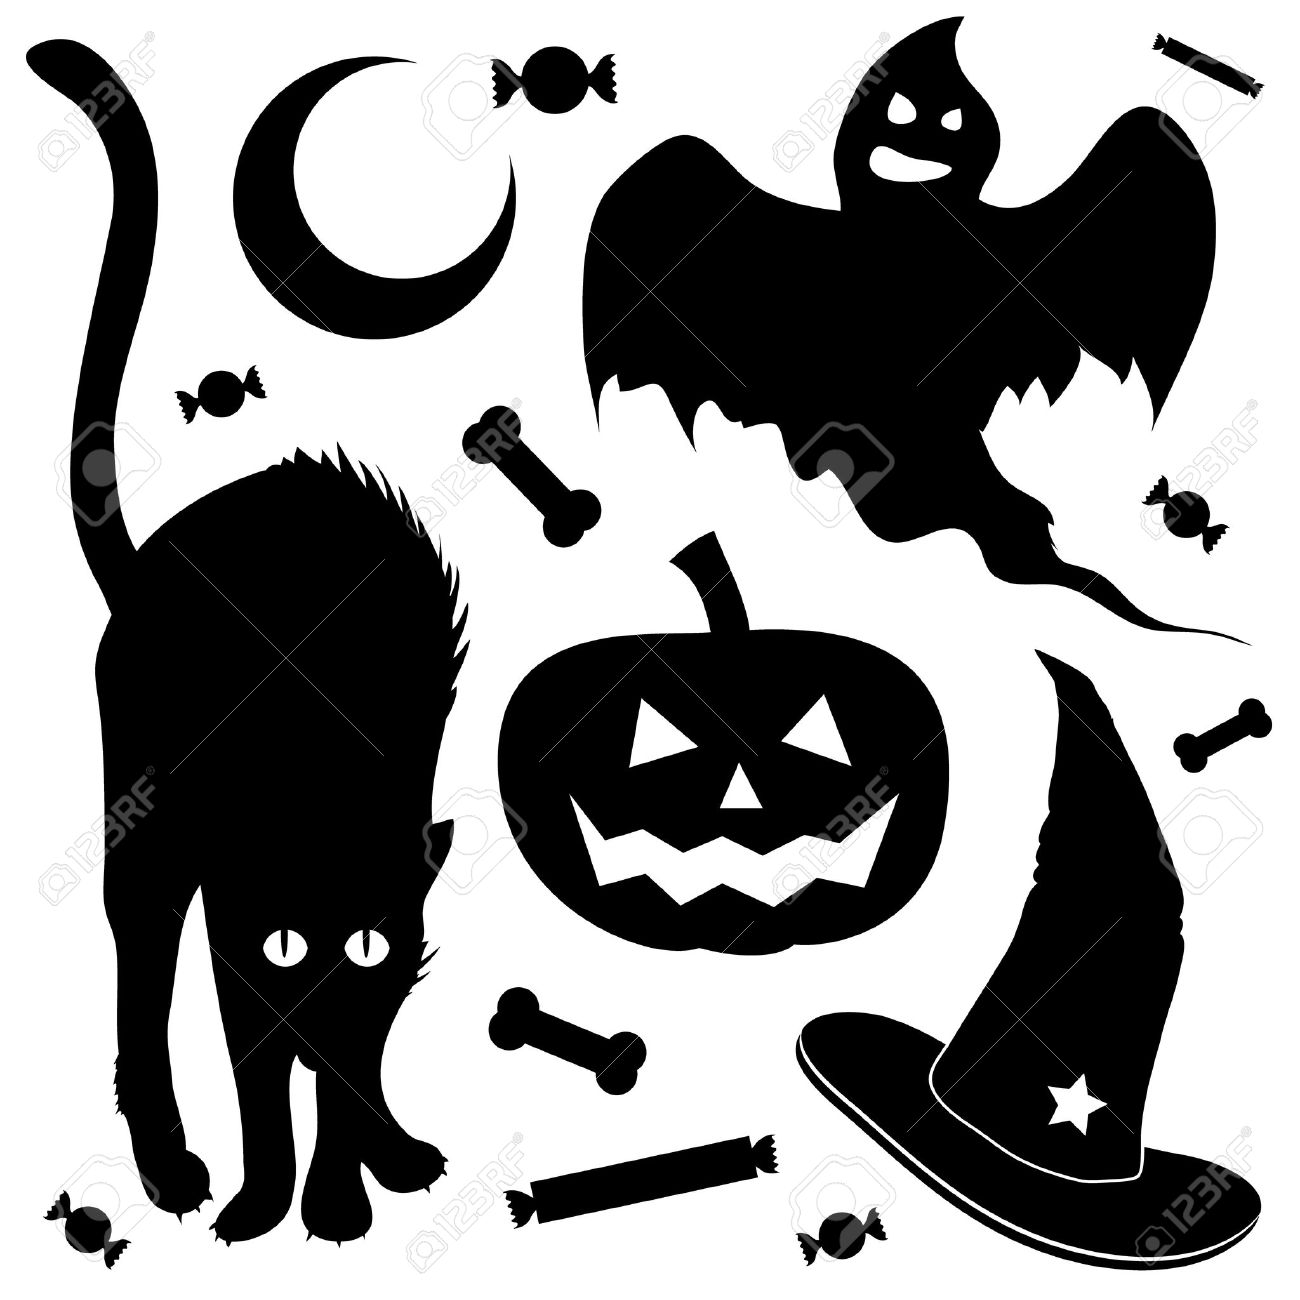 Halloween Design Elements Silhouette Set. Includes Black Cat.